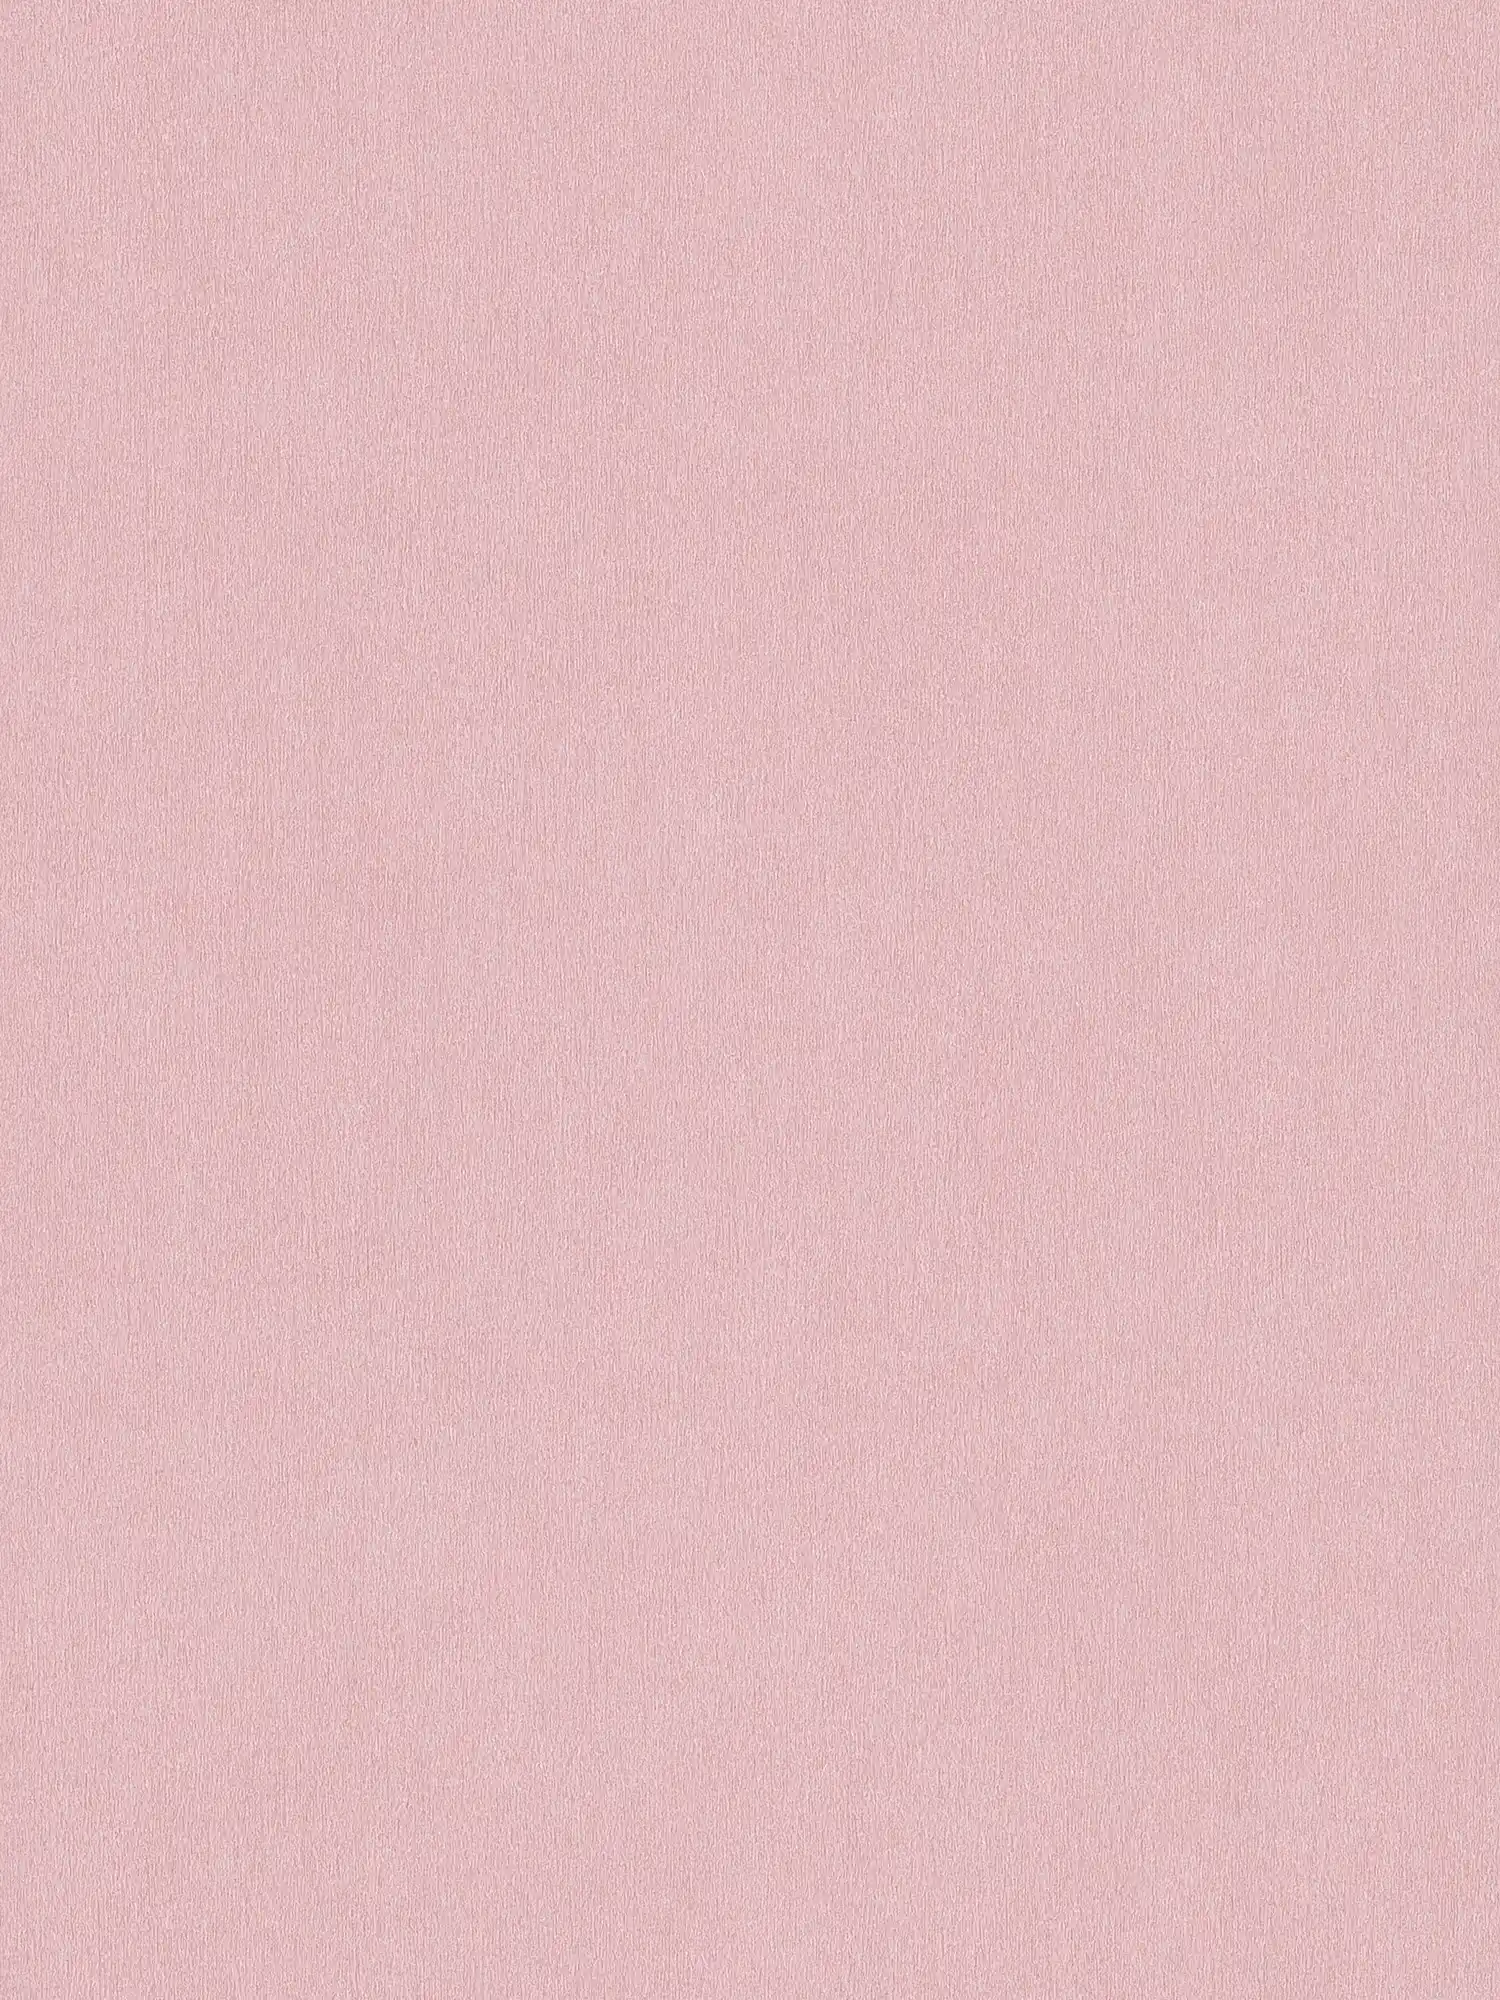 Papel pintado rosa liso con sombreado de color
